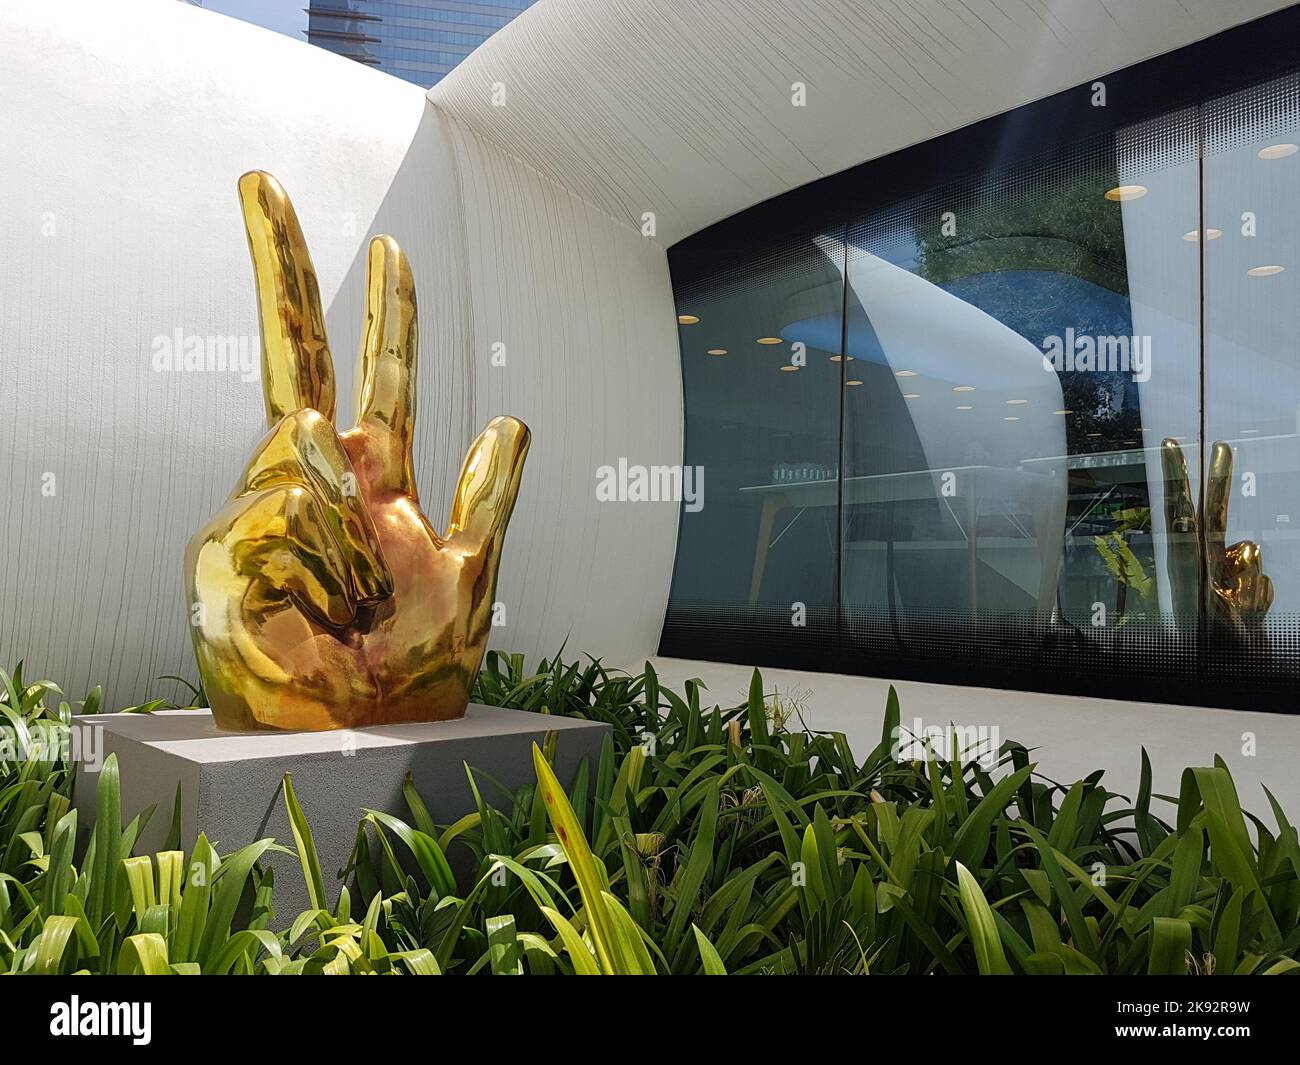 Gold three-finger salute statue outside Dubai Future Foundation. Hand gesture created by Sheikh Mohammed bin Rashid al Maktoum, UAE prime minister. Stock Photo